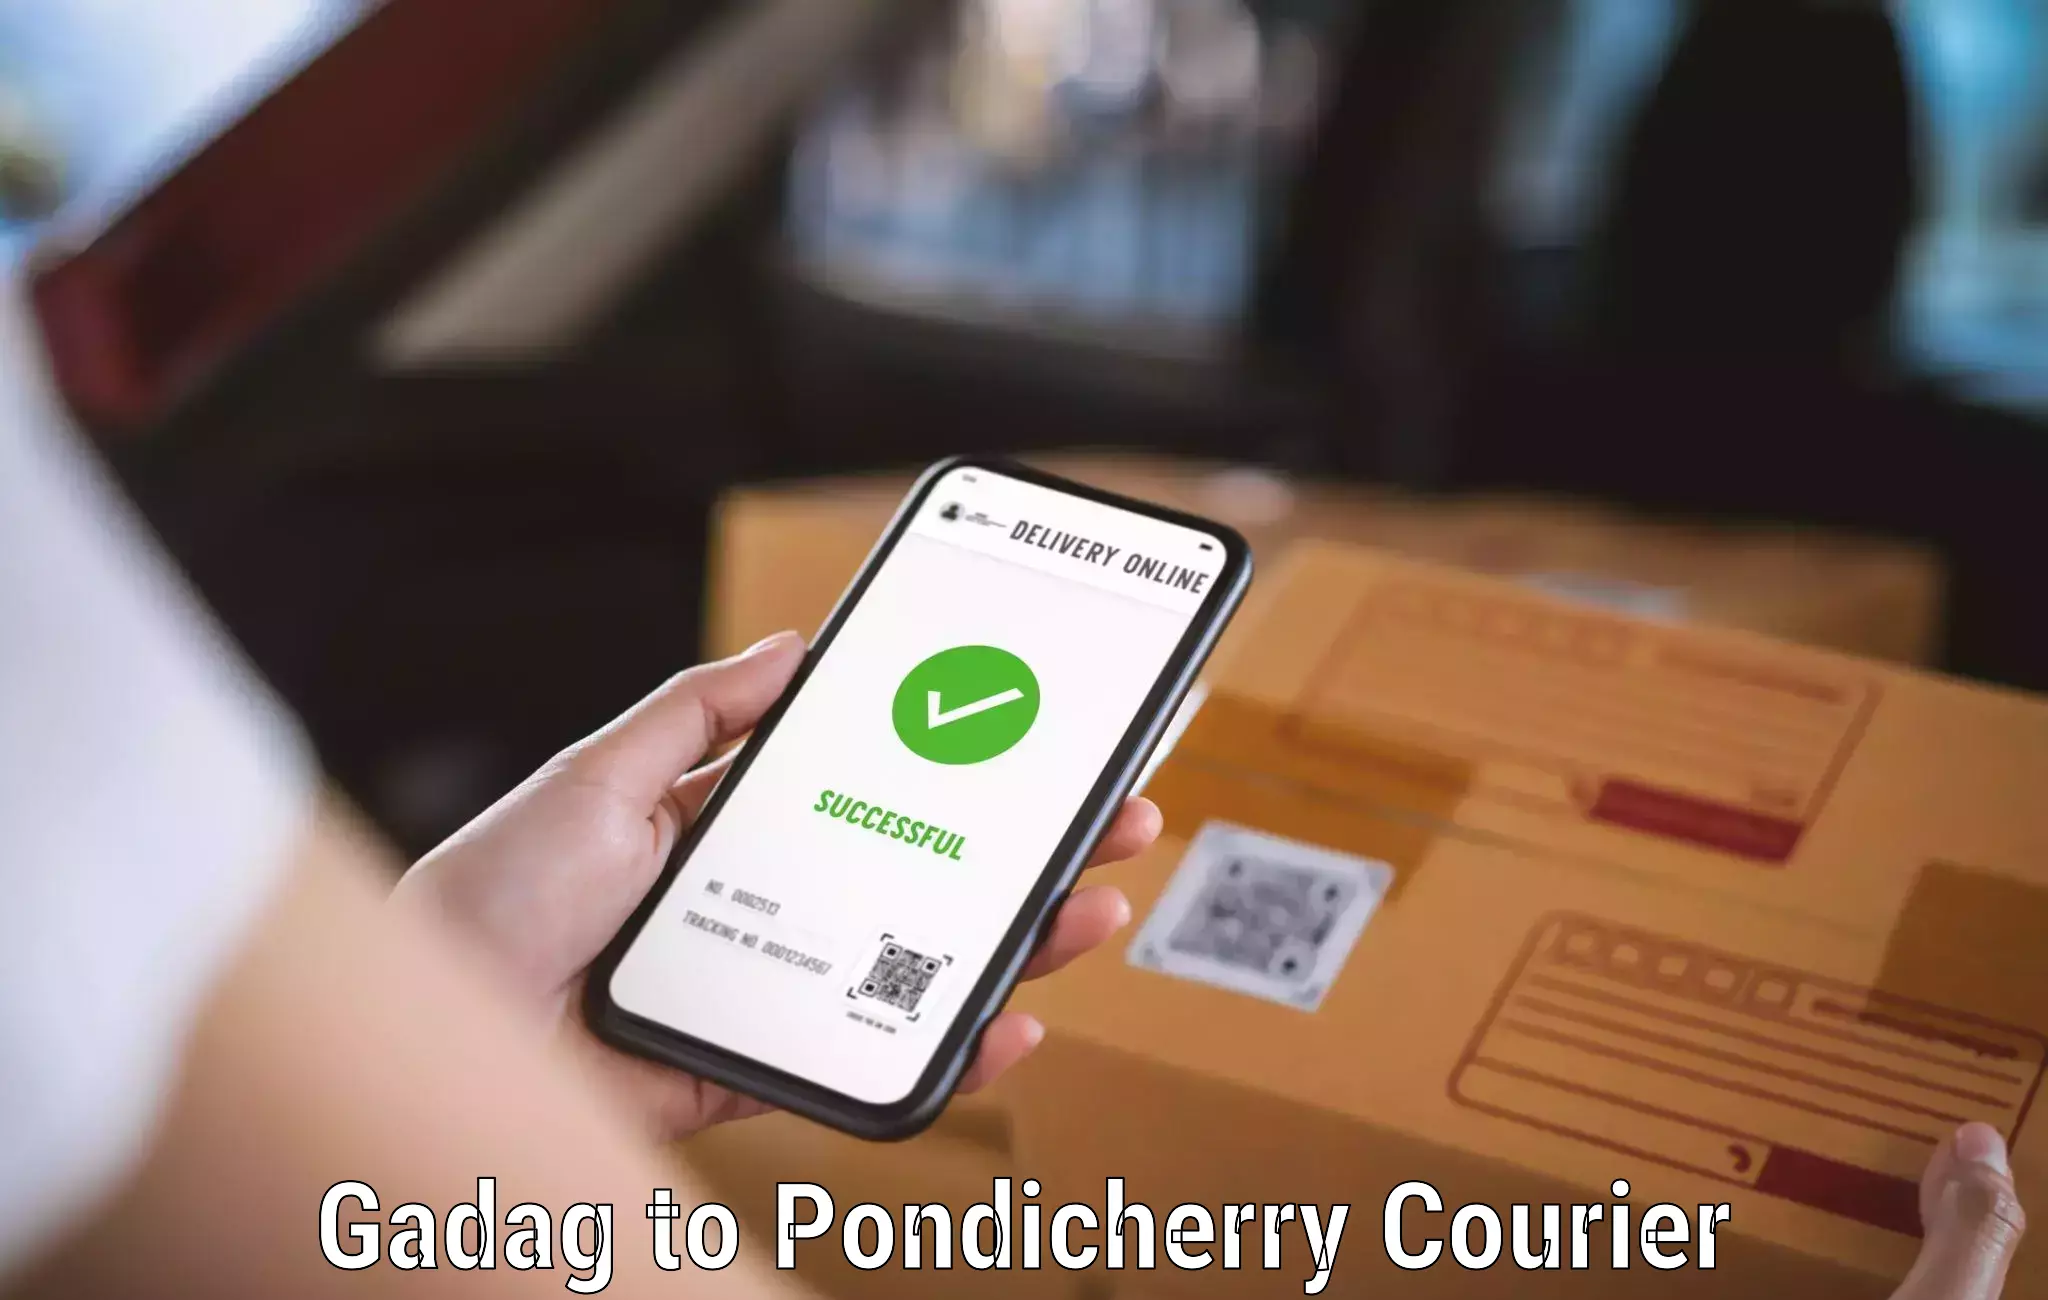 Courier service partnerships Gadag to Pondicherry